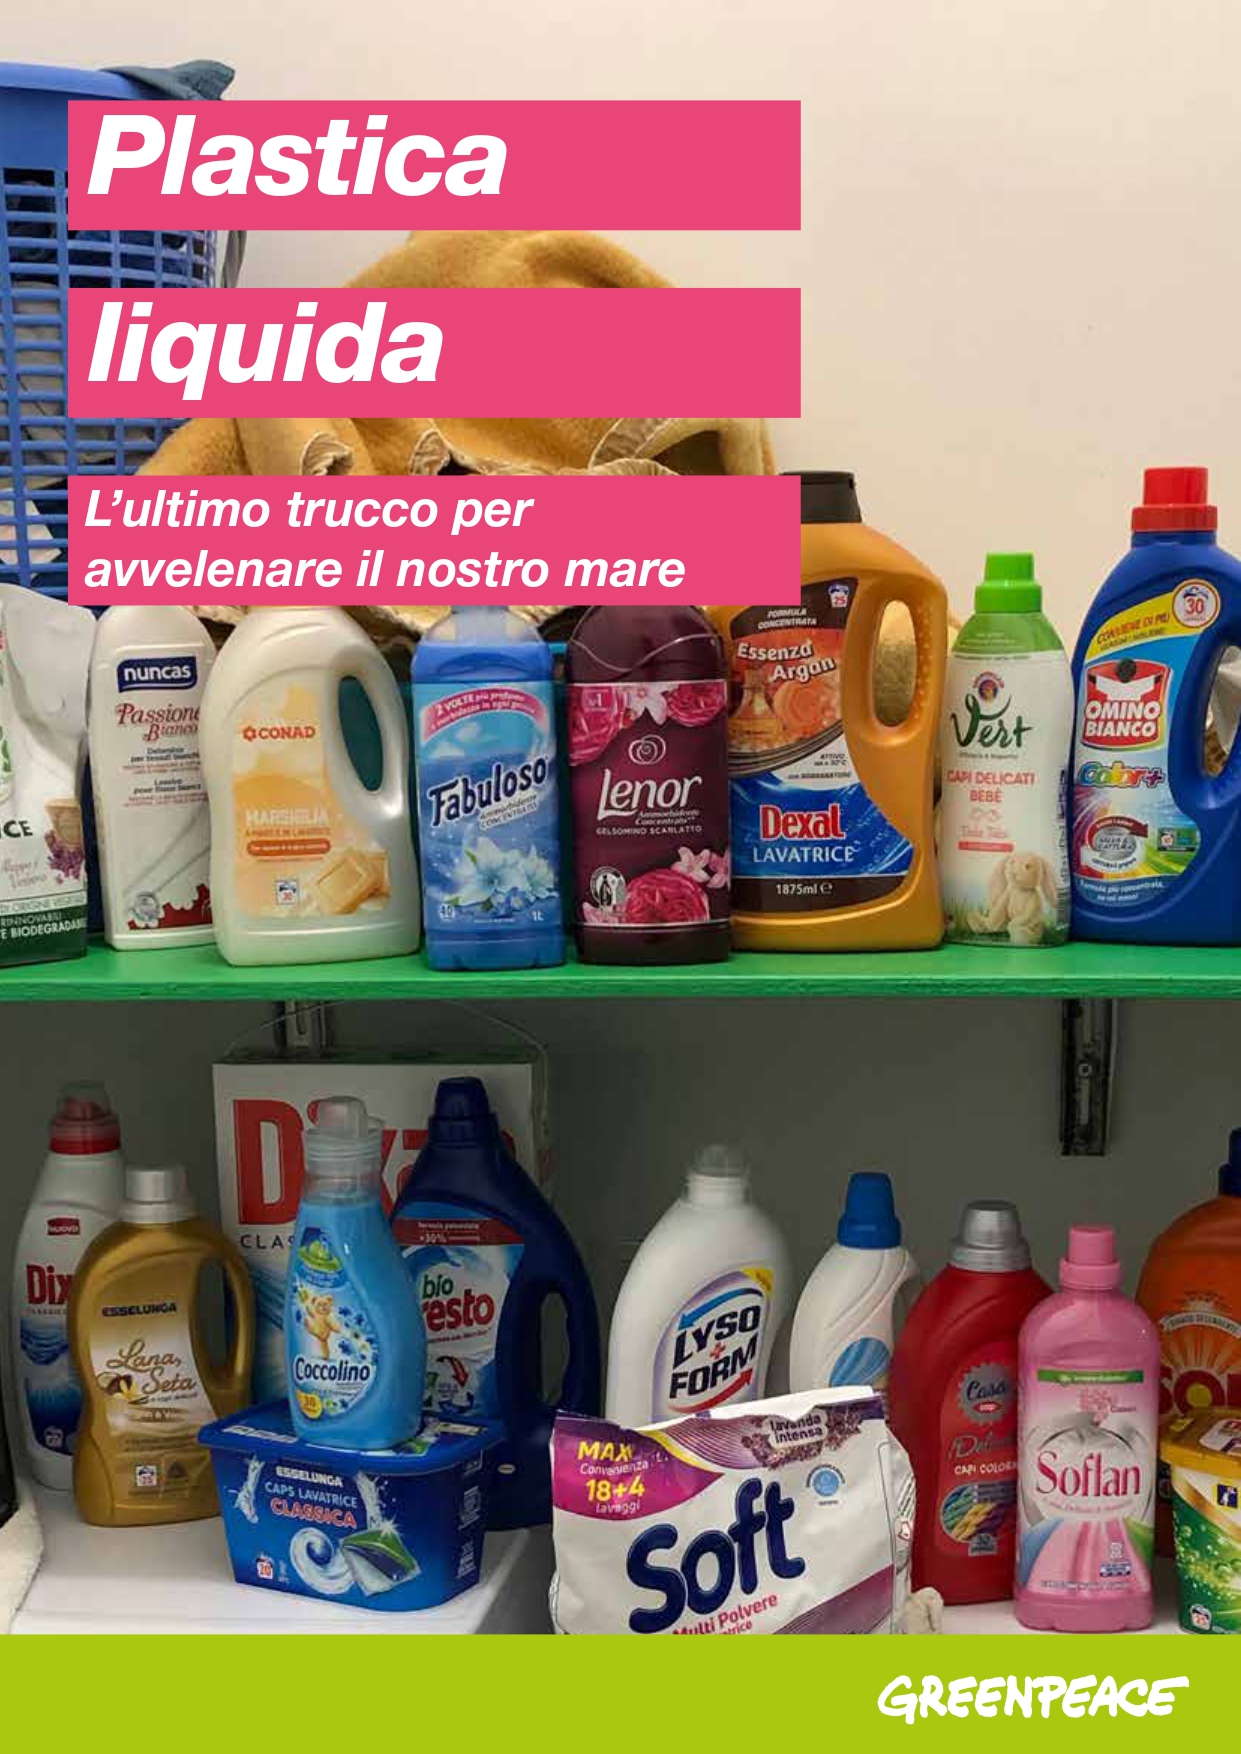 Plastica liquida - Greenpeace Italia